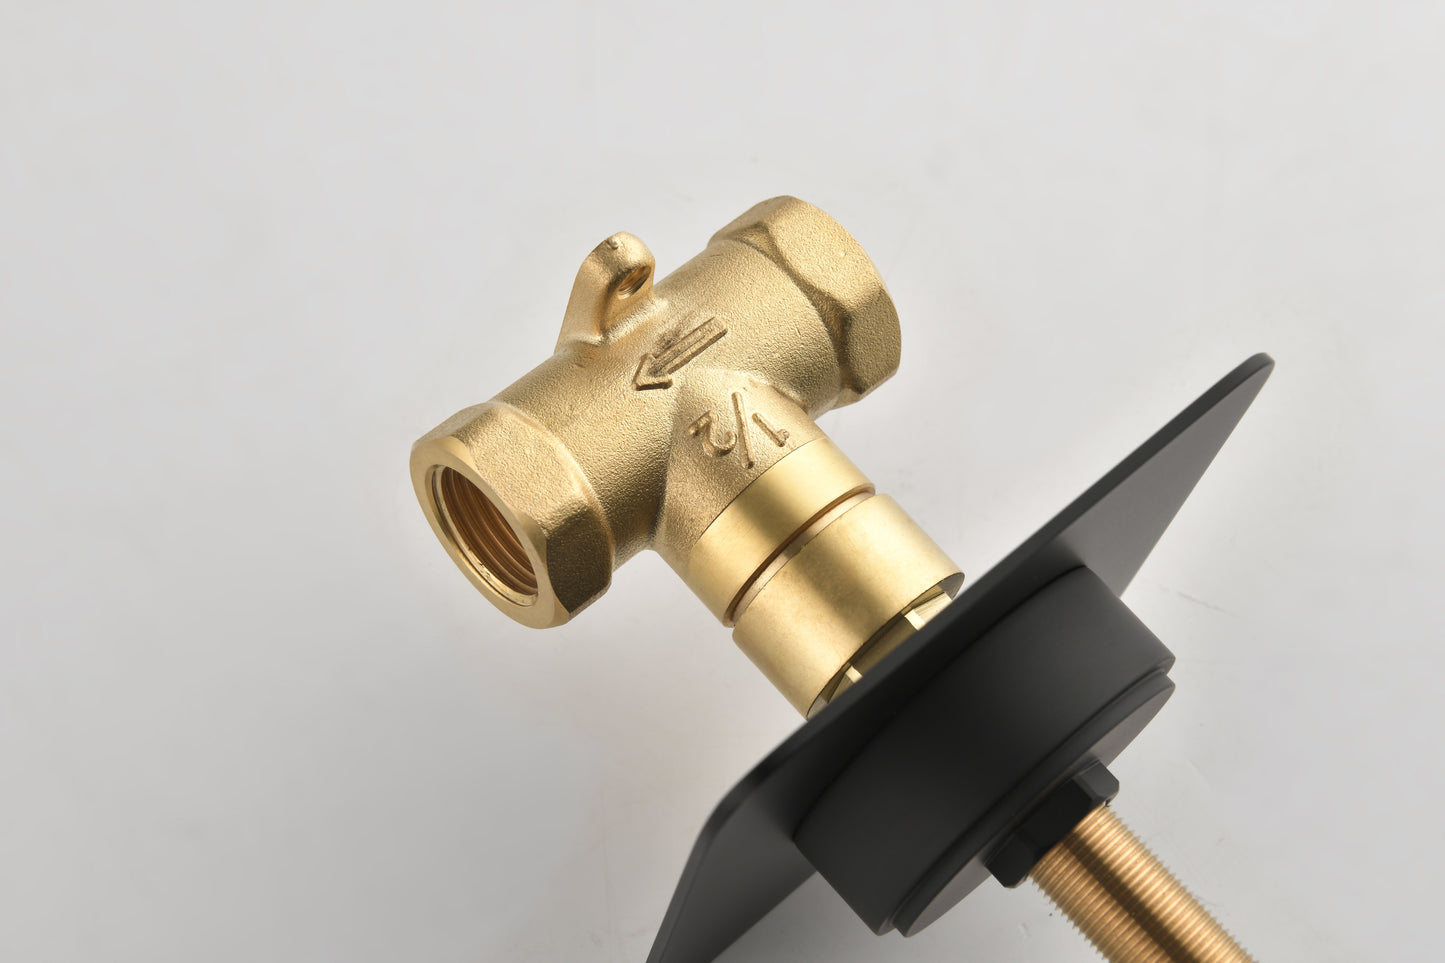 3/4" cast metal volume control valve        Master Shower Volume Control
adjustable  Brass Handle Valve Body 1 Piece